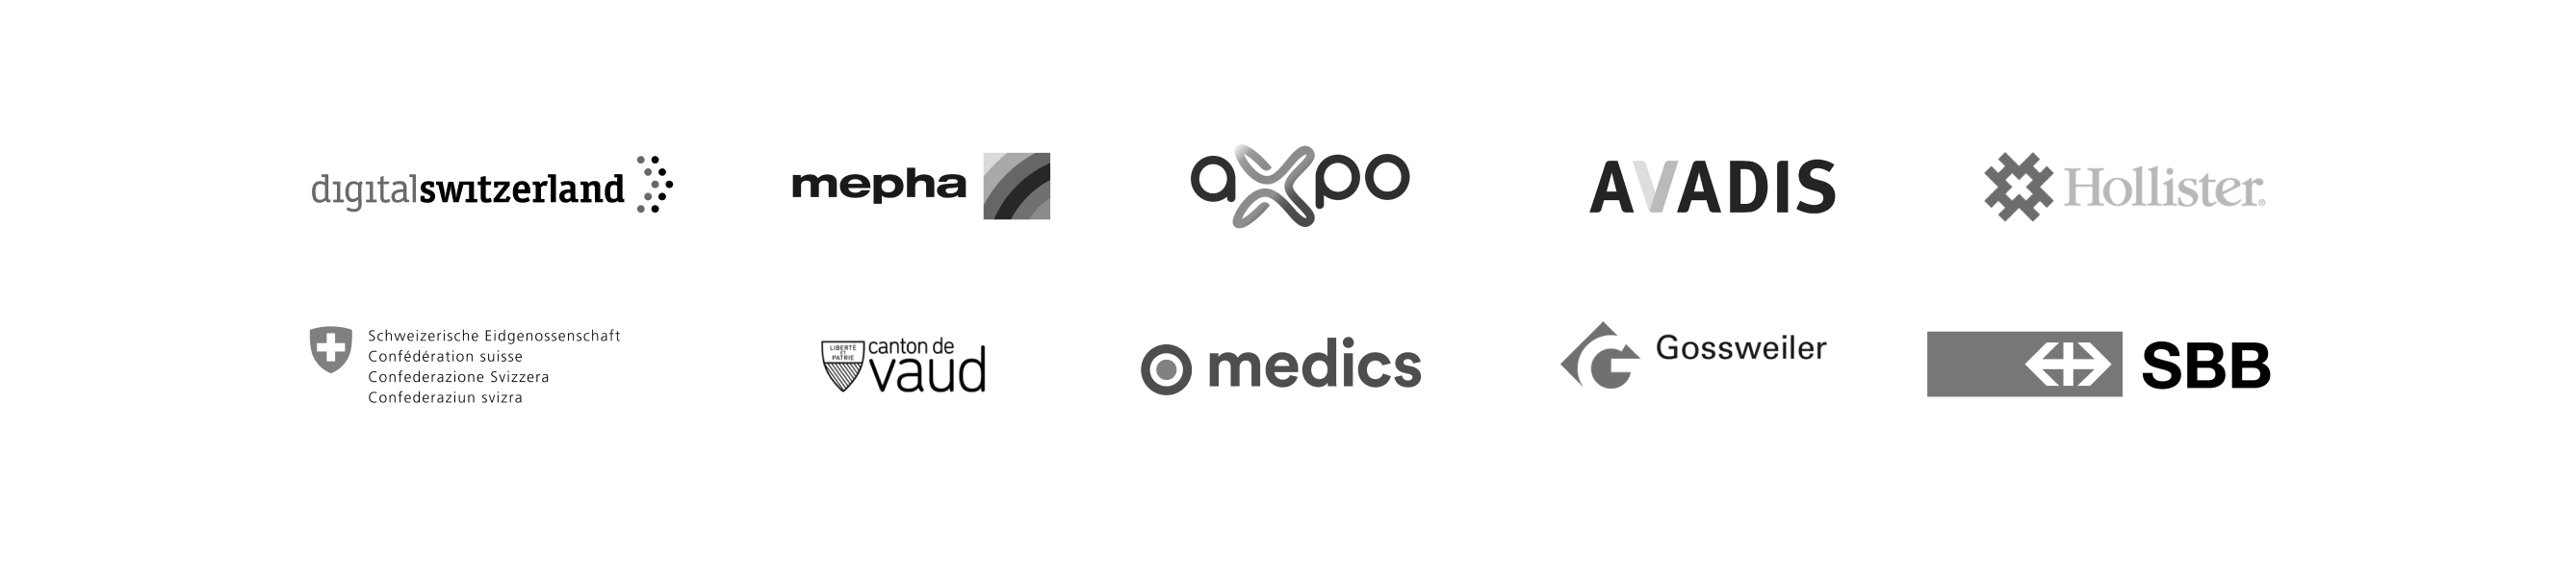 Logos von SBB, Mepha, Axpo, Digitalswitzerland, Kanton Waadt, Schweizerische Eidgenossenschaft, Medics, Gossweiler, Avadis, Hollister